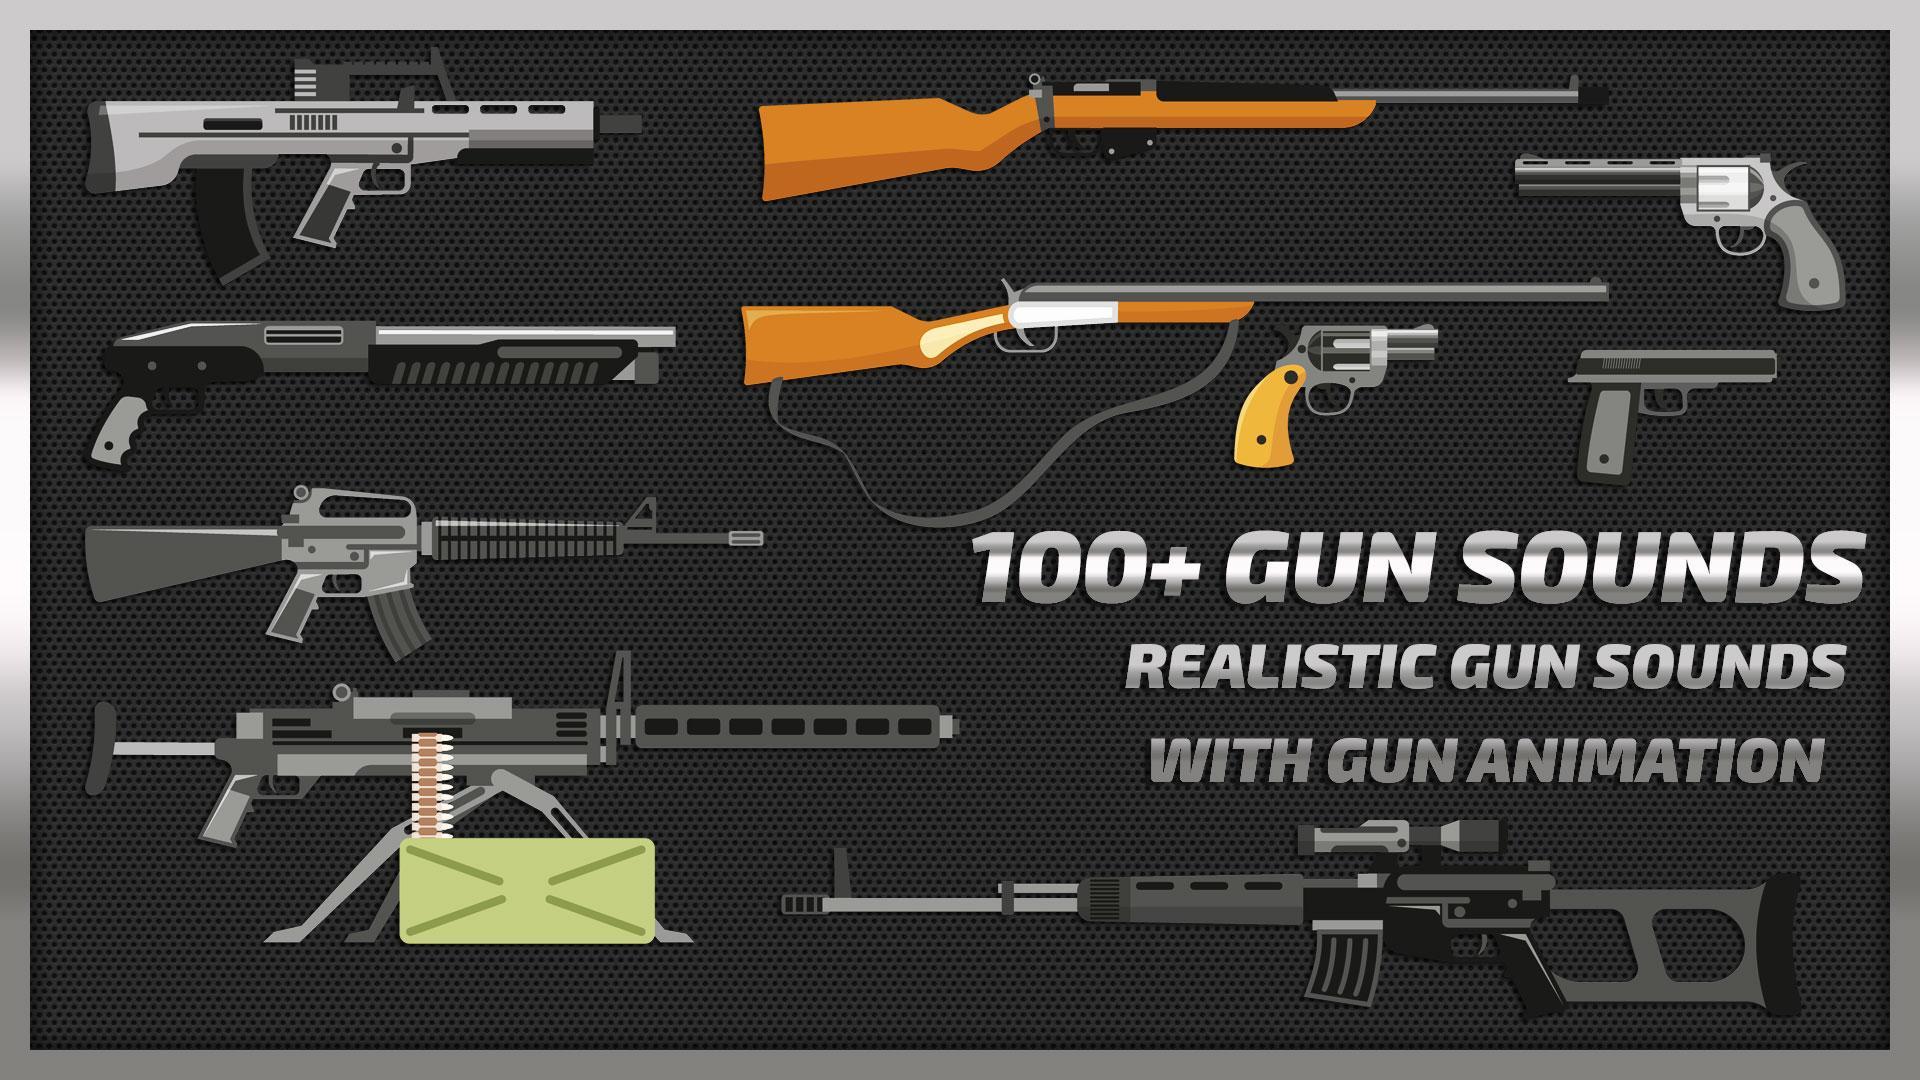 Realistic gun